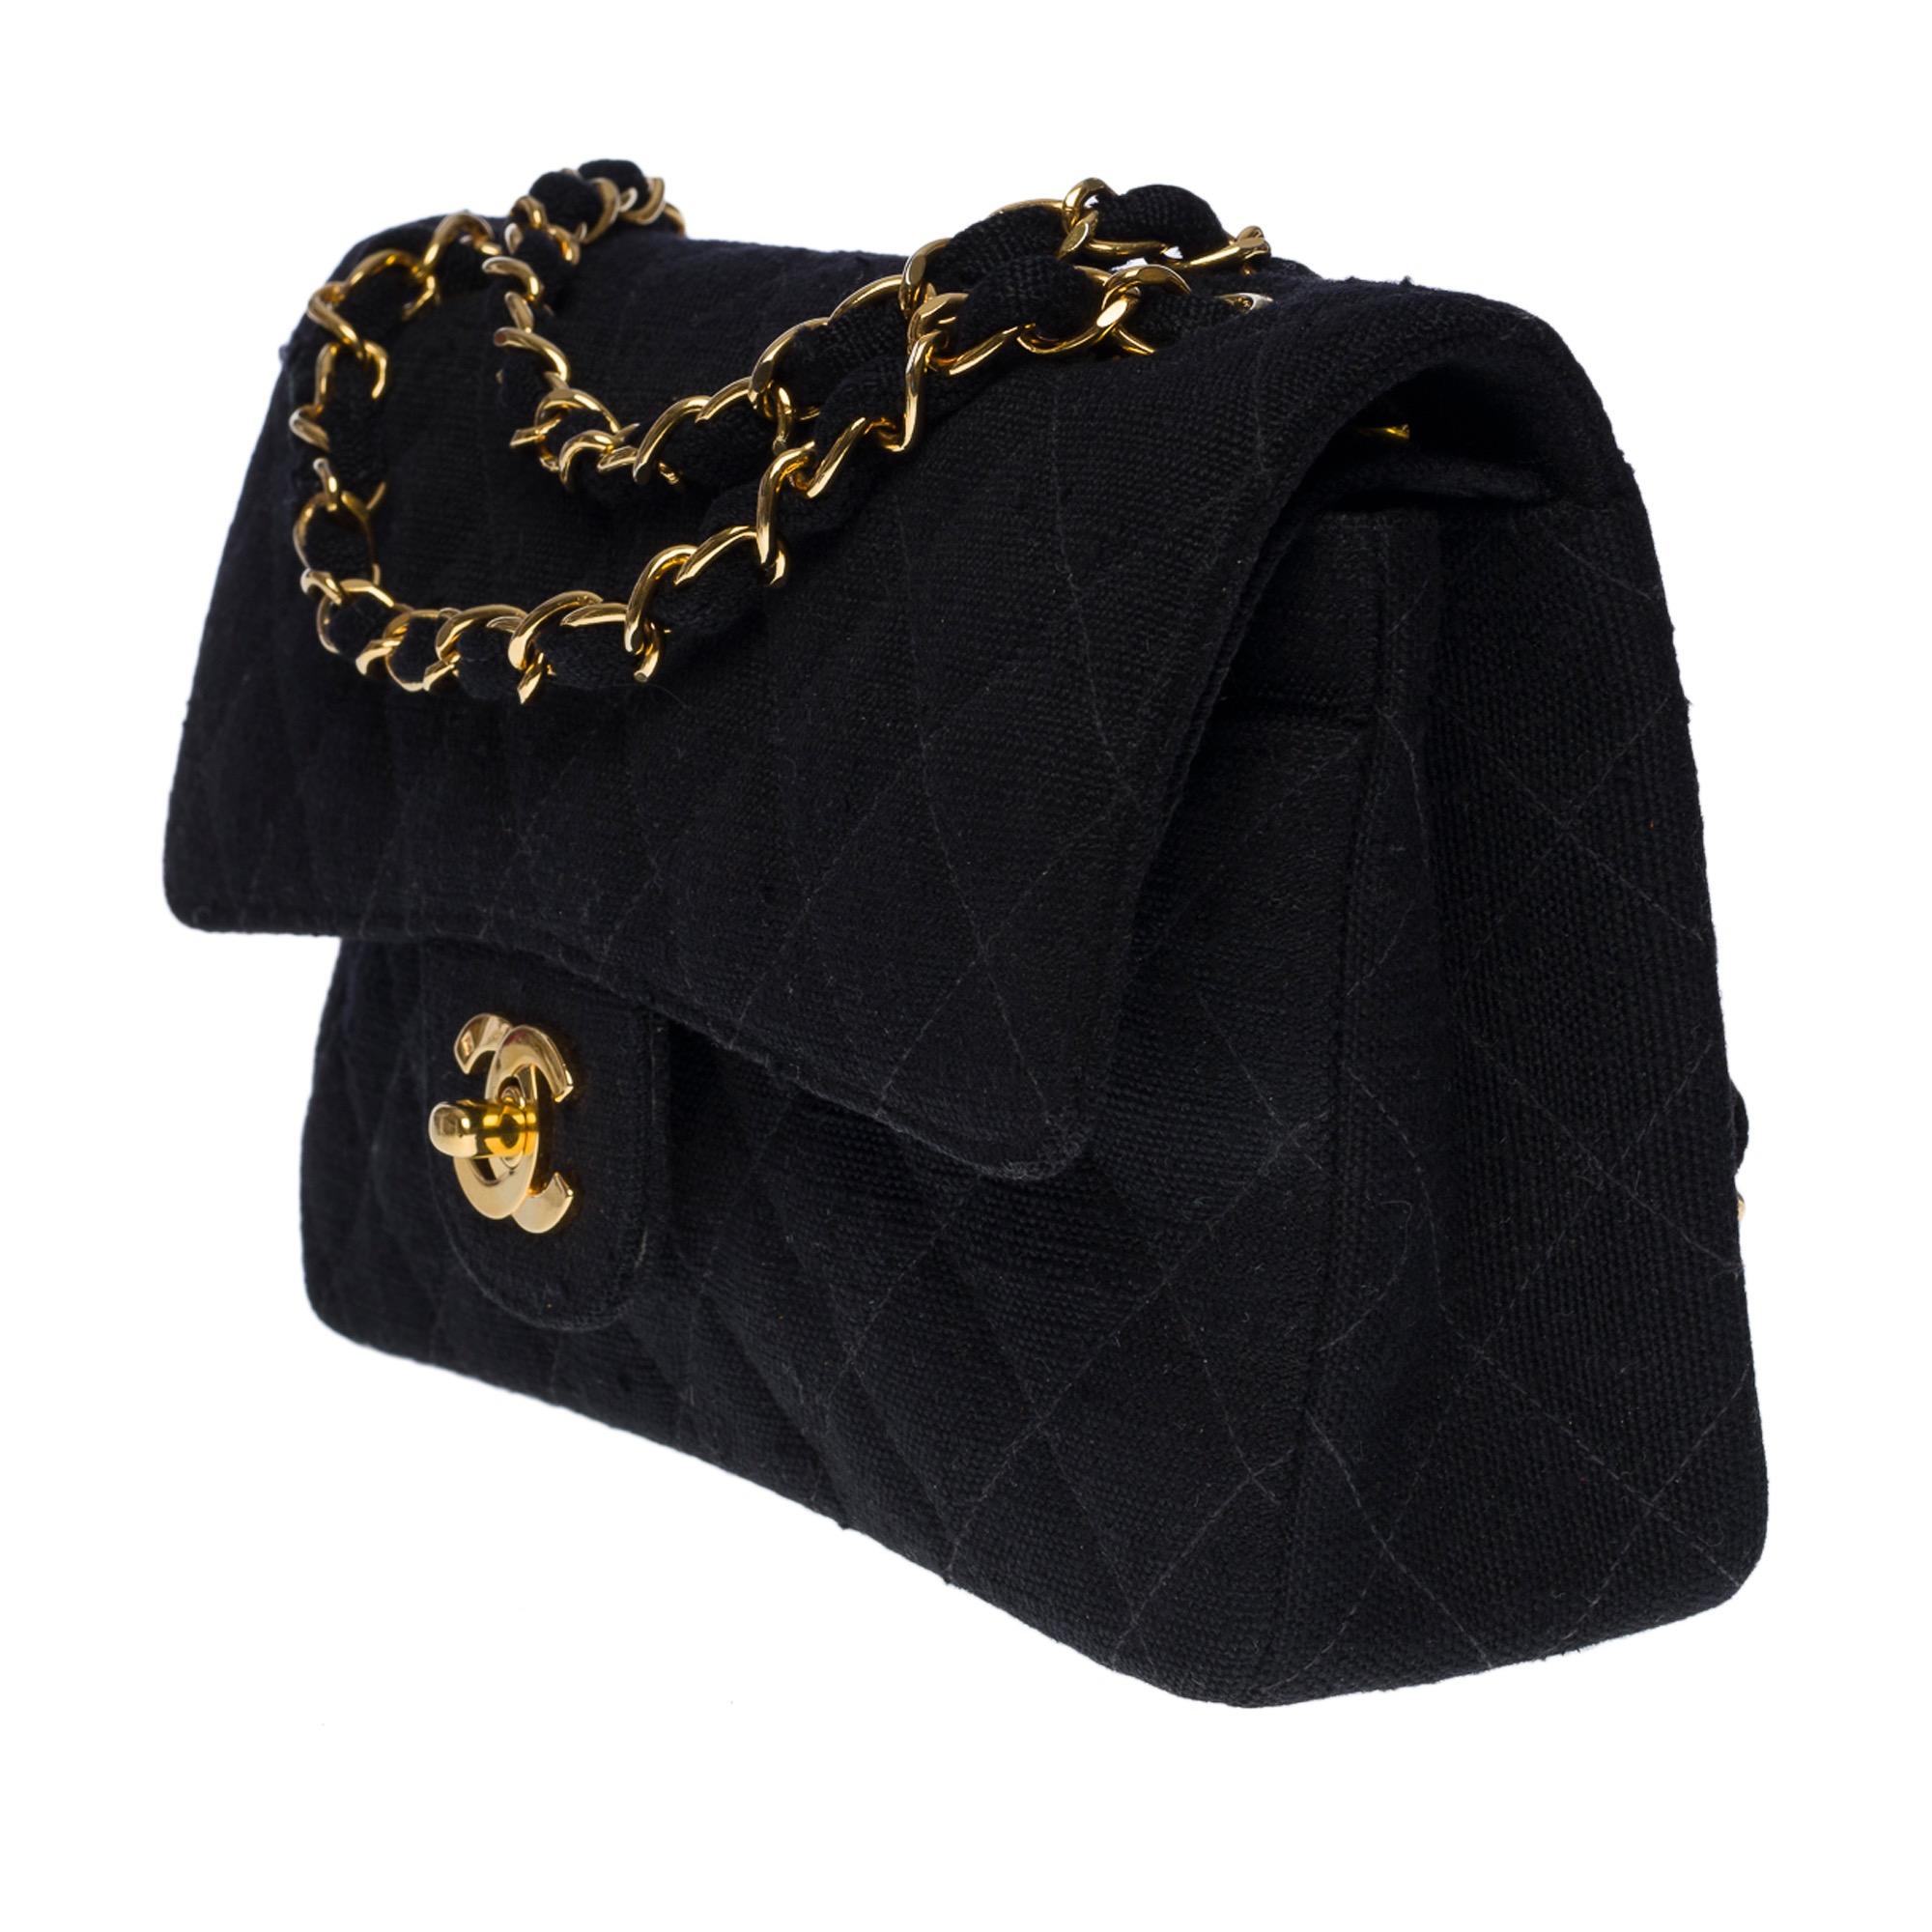 Women's Chanel Timeless 23cm double flap shoulder bag in black linen, GHW